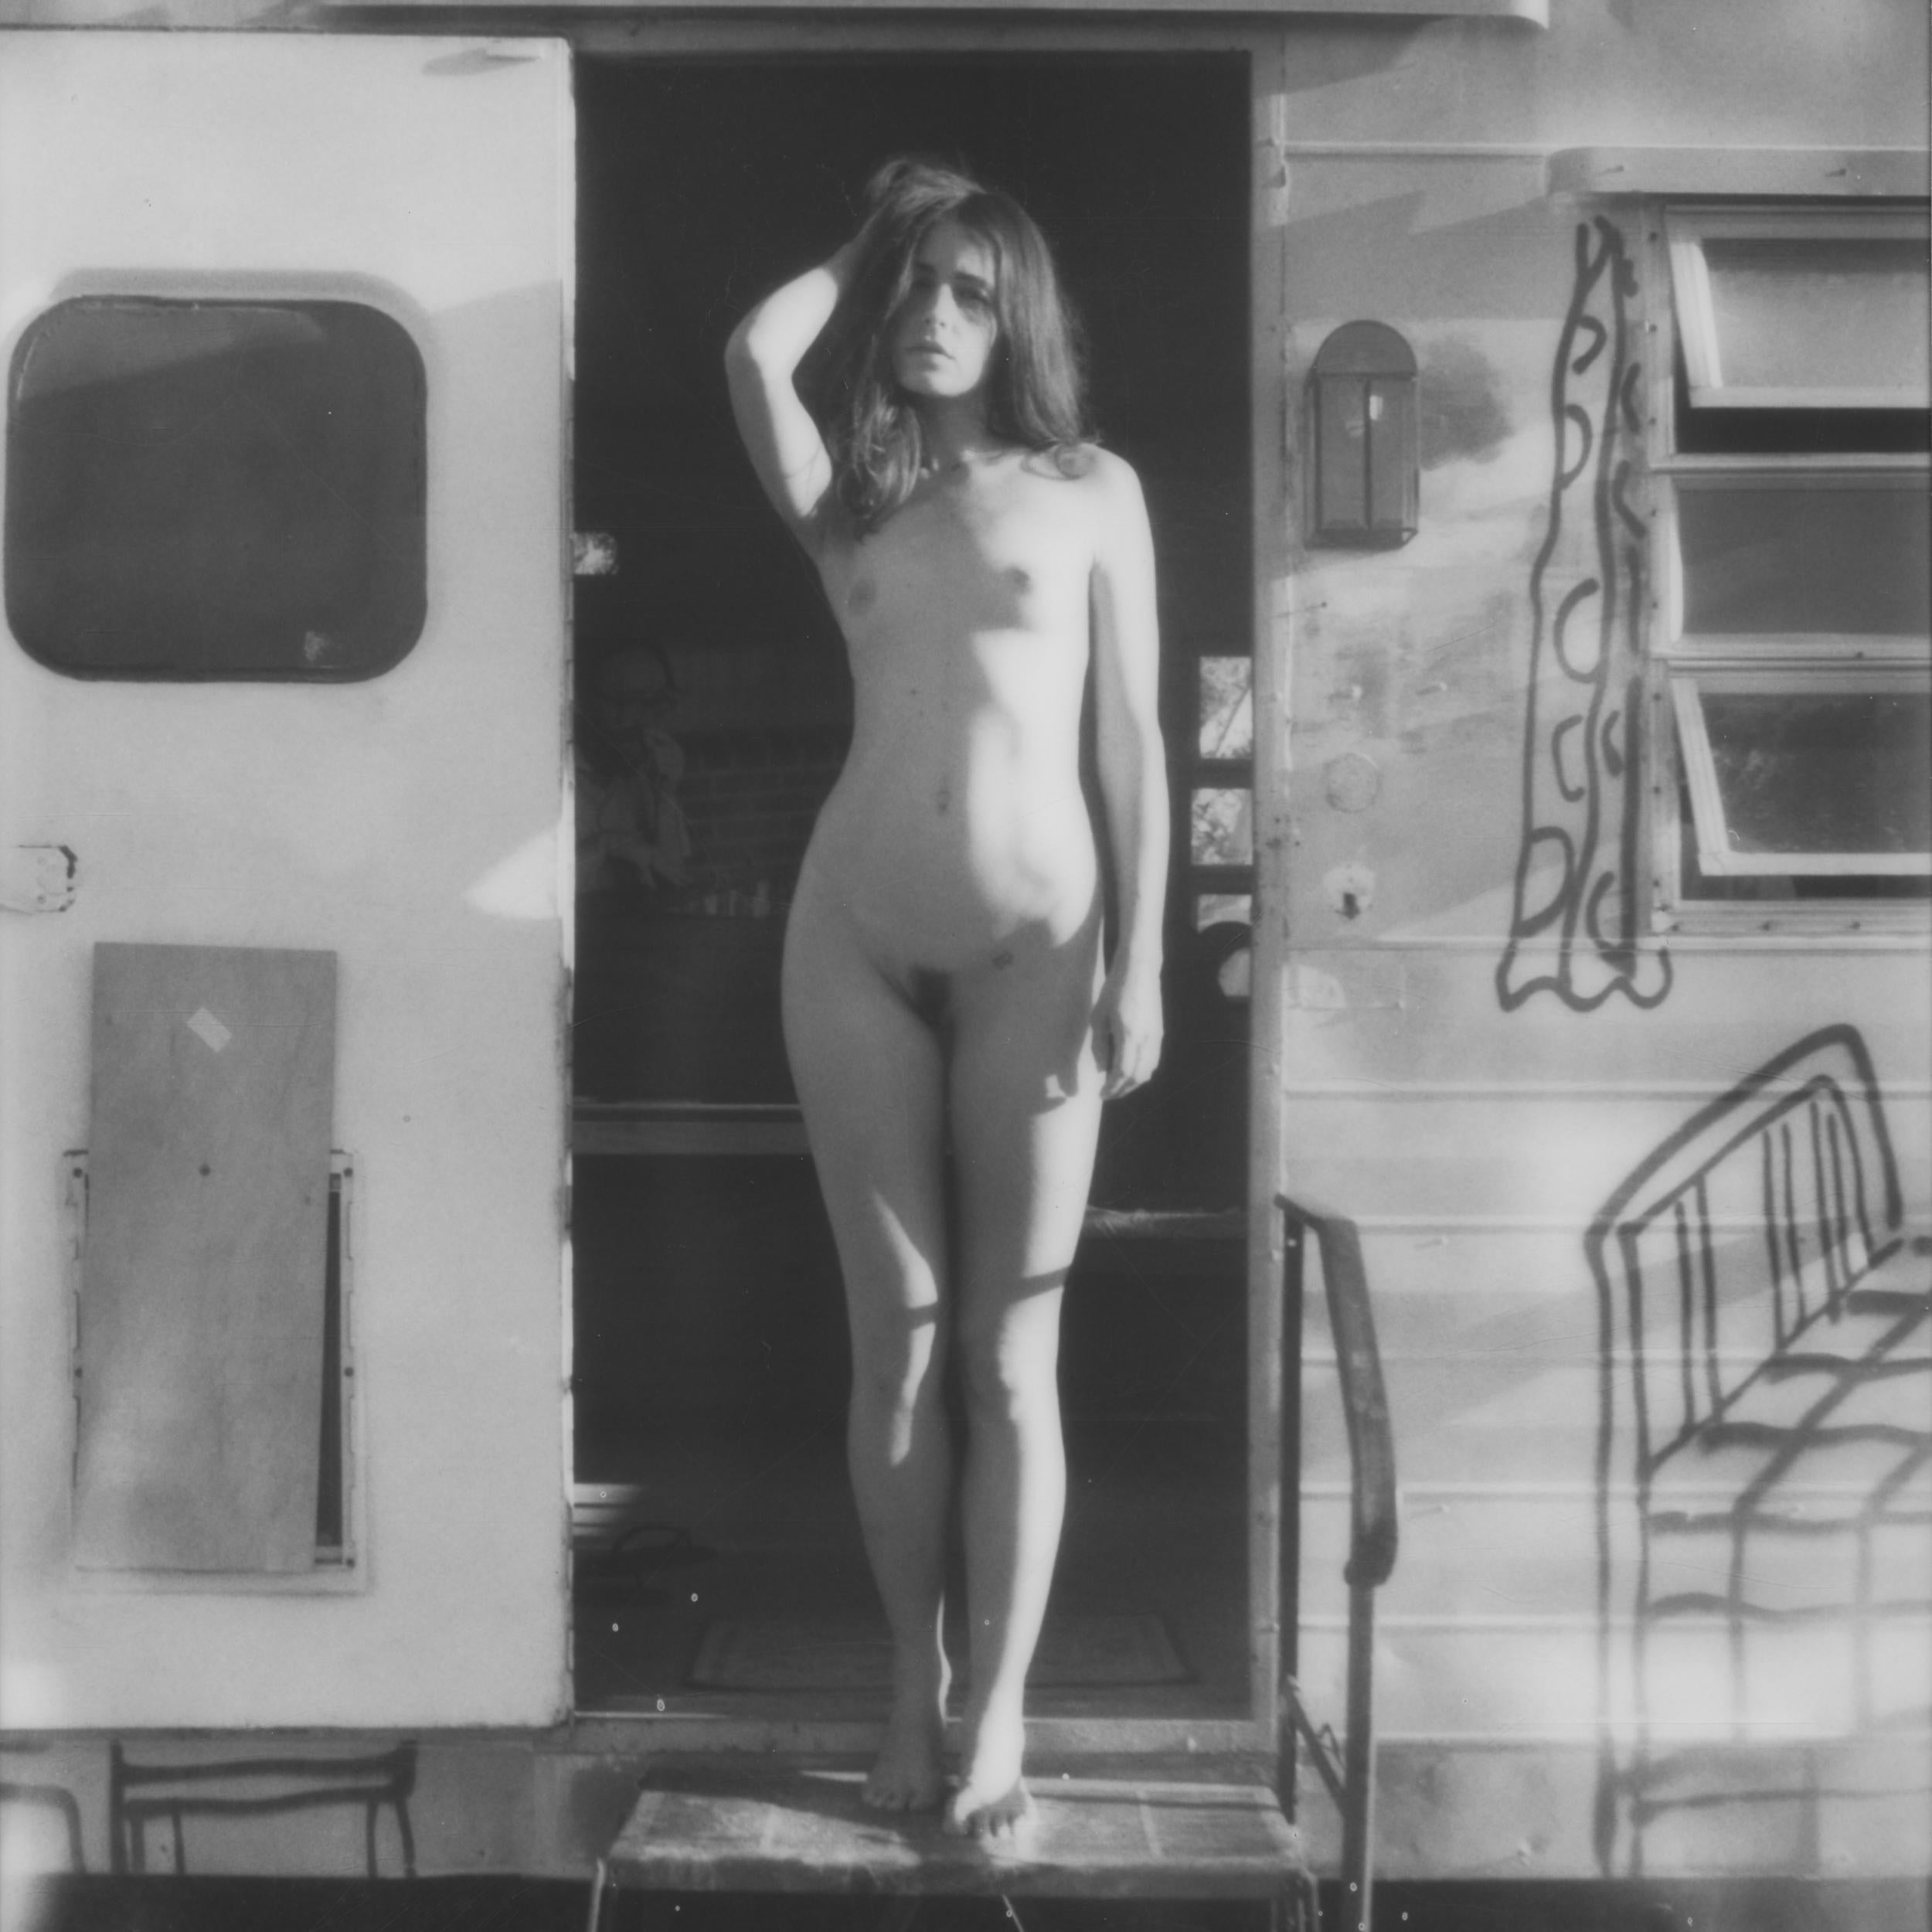 Kirsten Thys van den Audenaerde Nude Photograph - Wake-up call (Bombay Beach) - Contemporary, Polaroid, Nude, Black and White